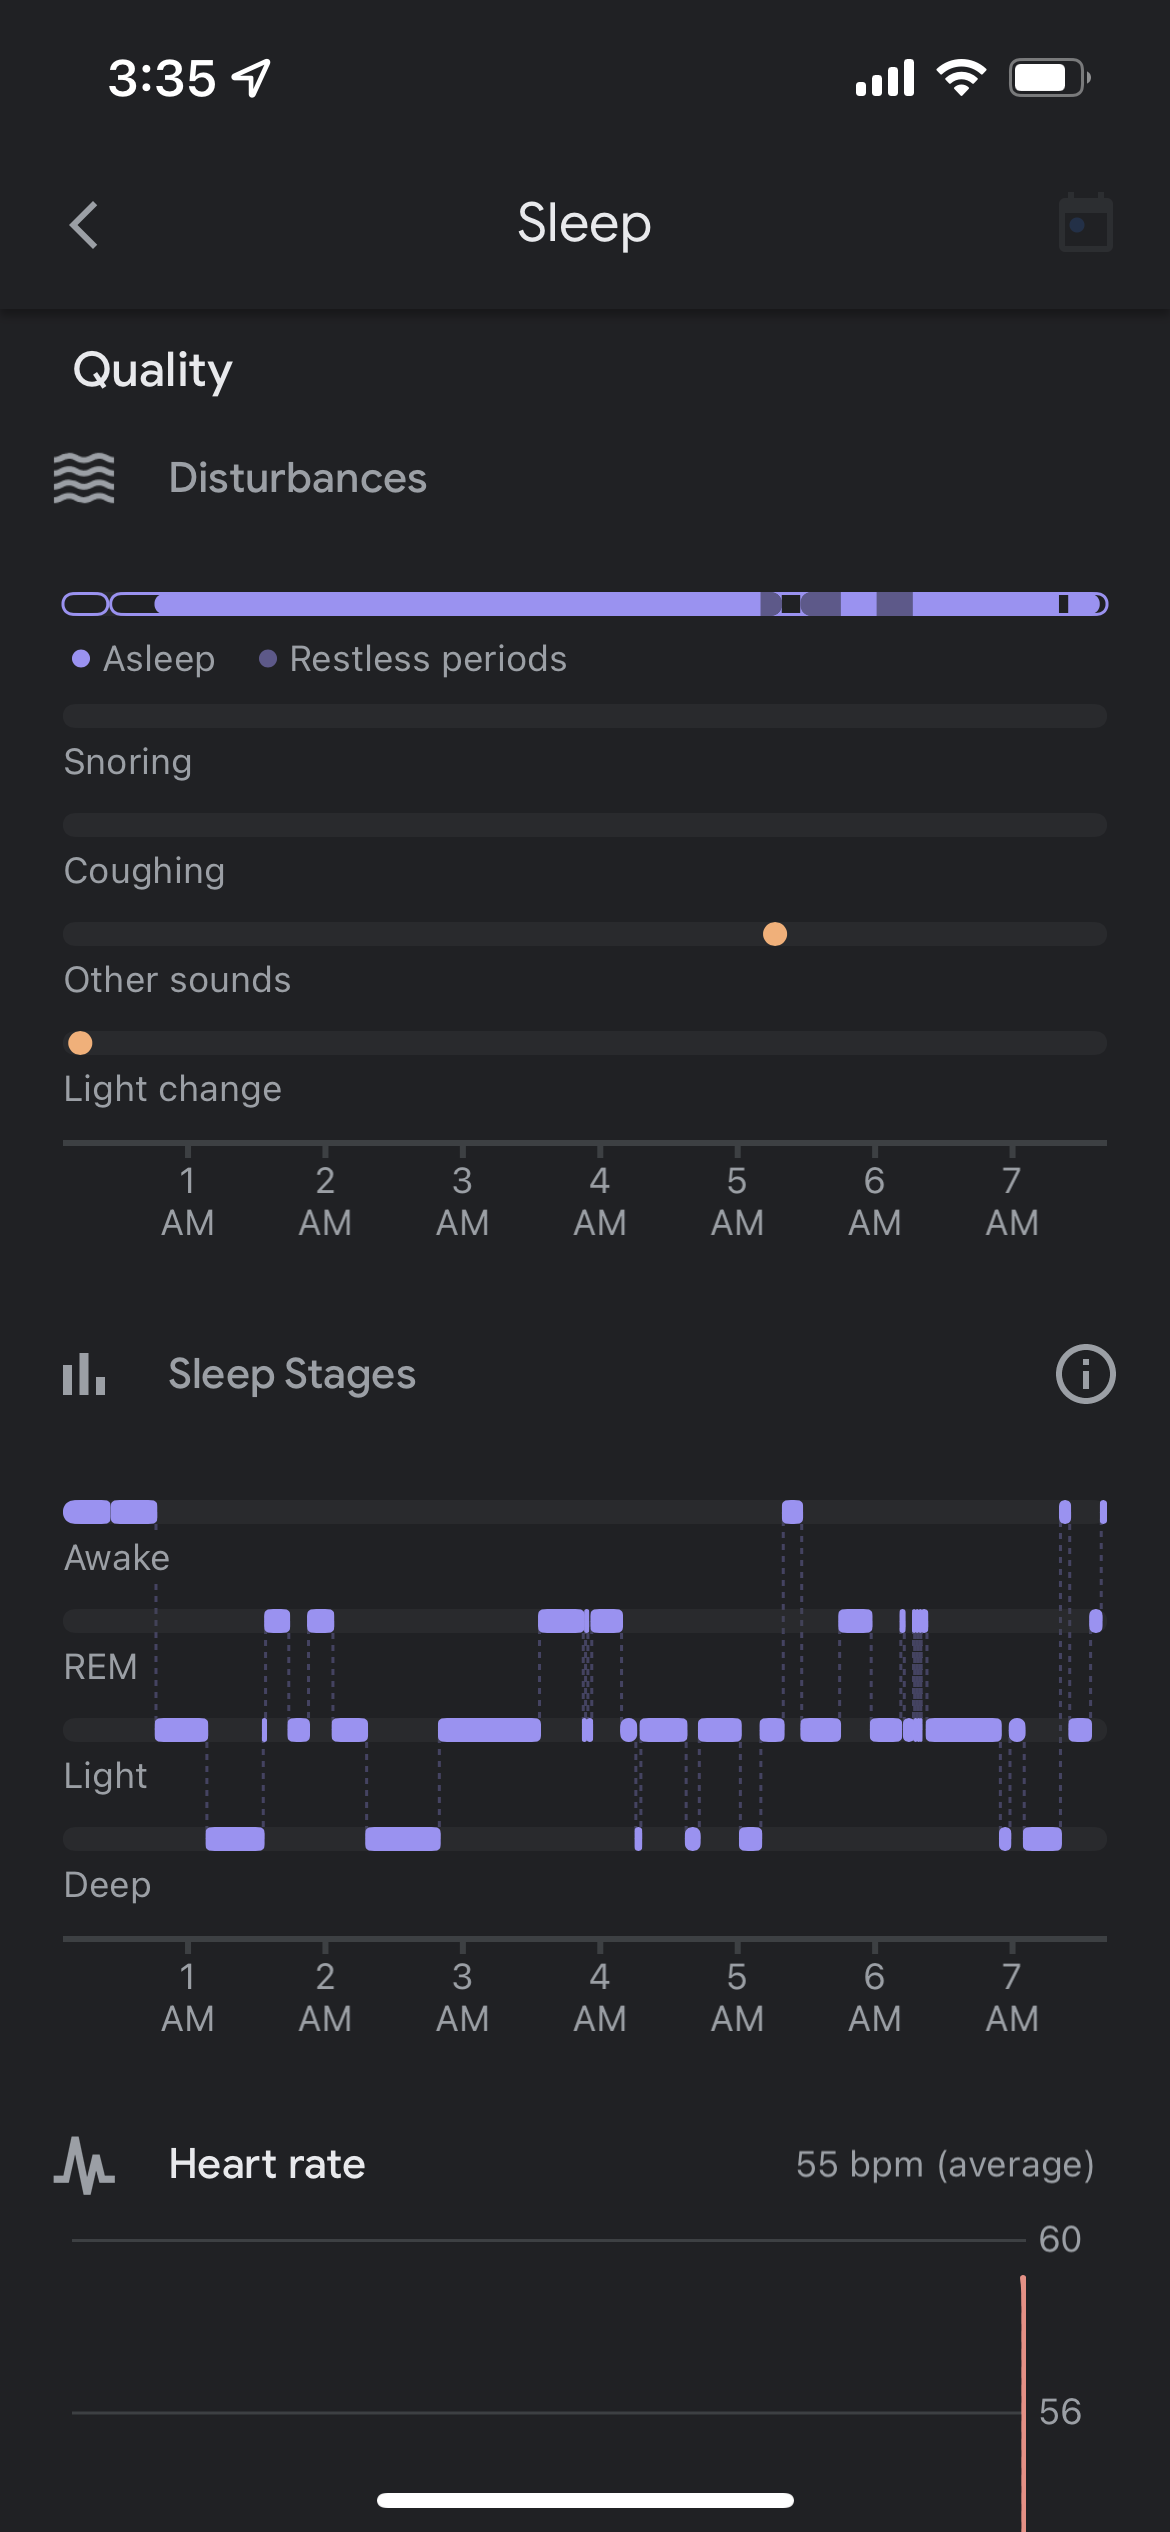 Disturbances and sleep stages in the Google Fit Sleep Summary